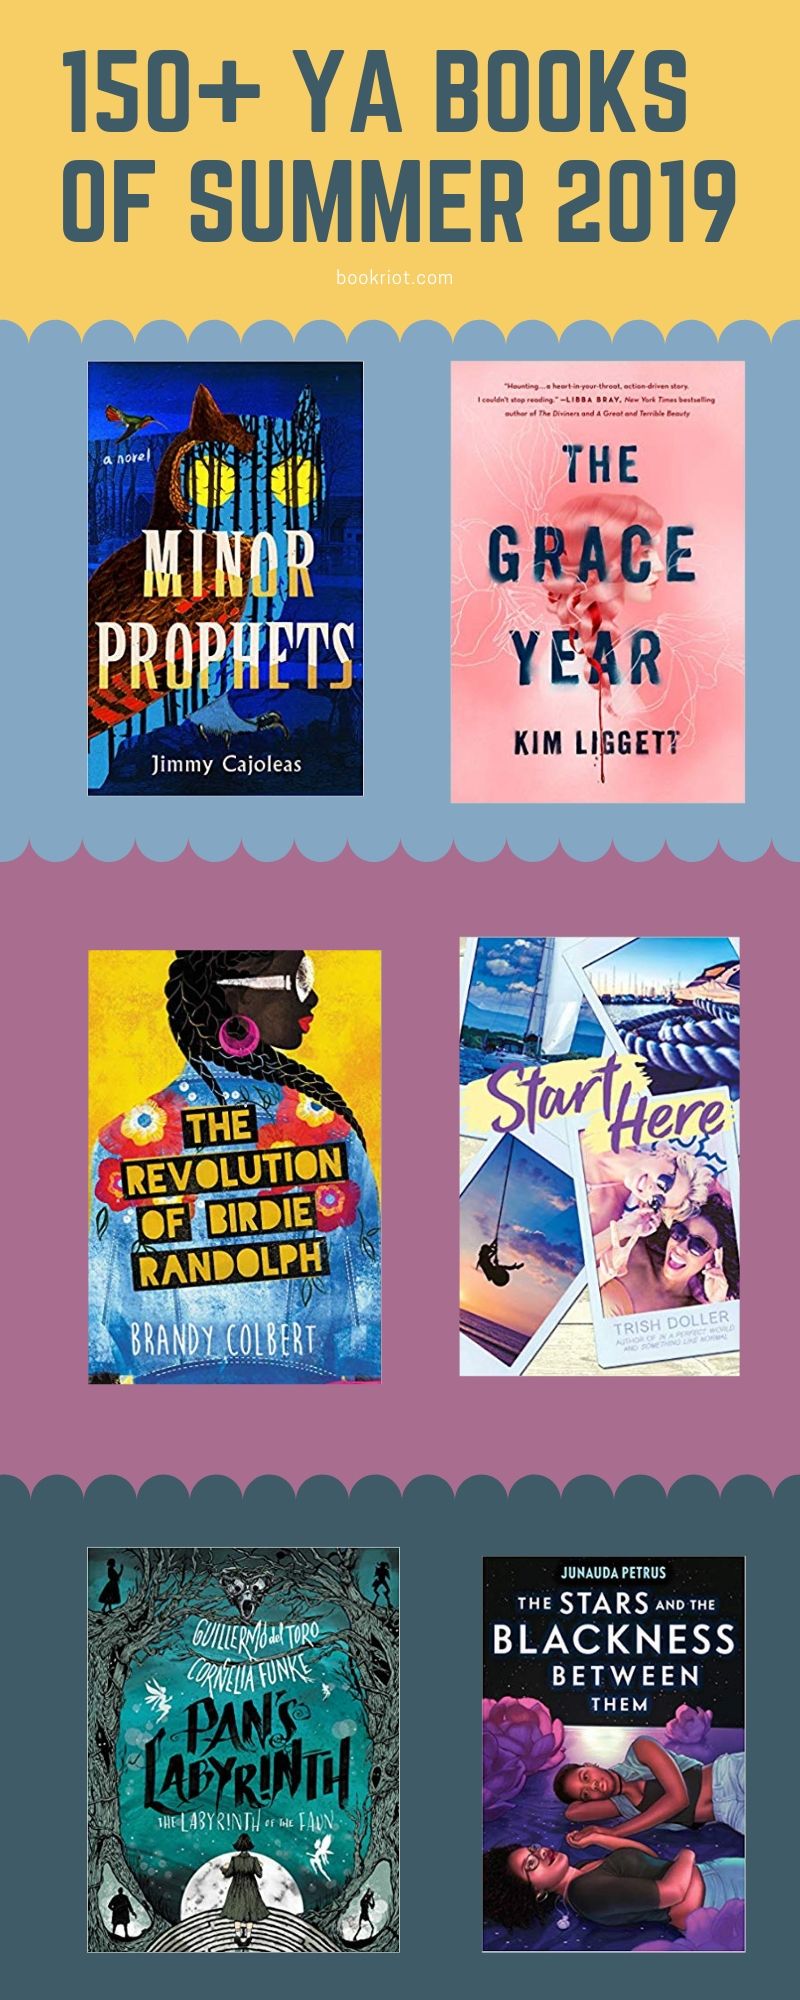 Summer 2019 Ya Books 150 New Titles Hitting Shelves - 